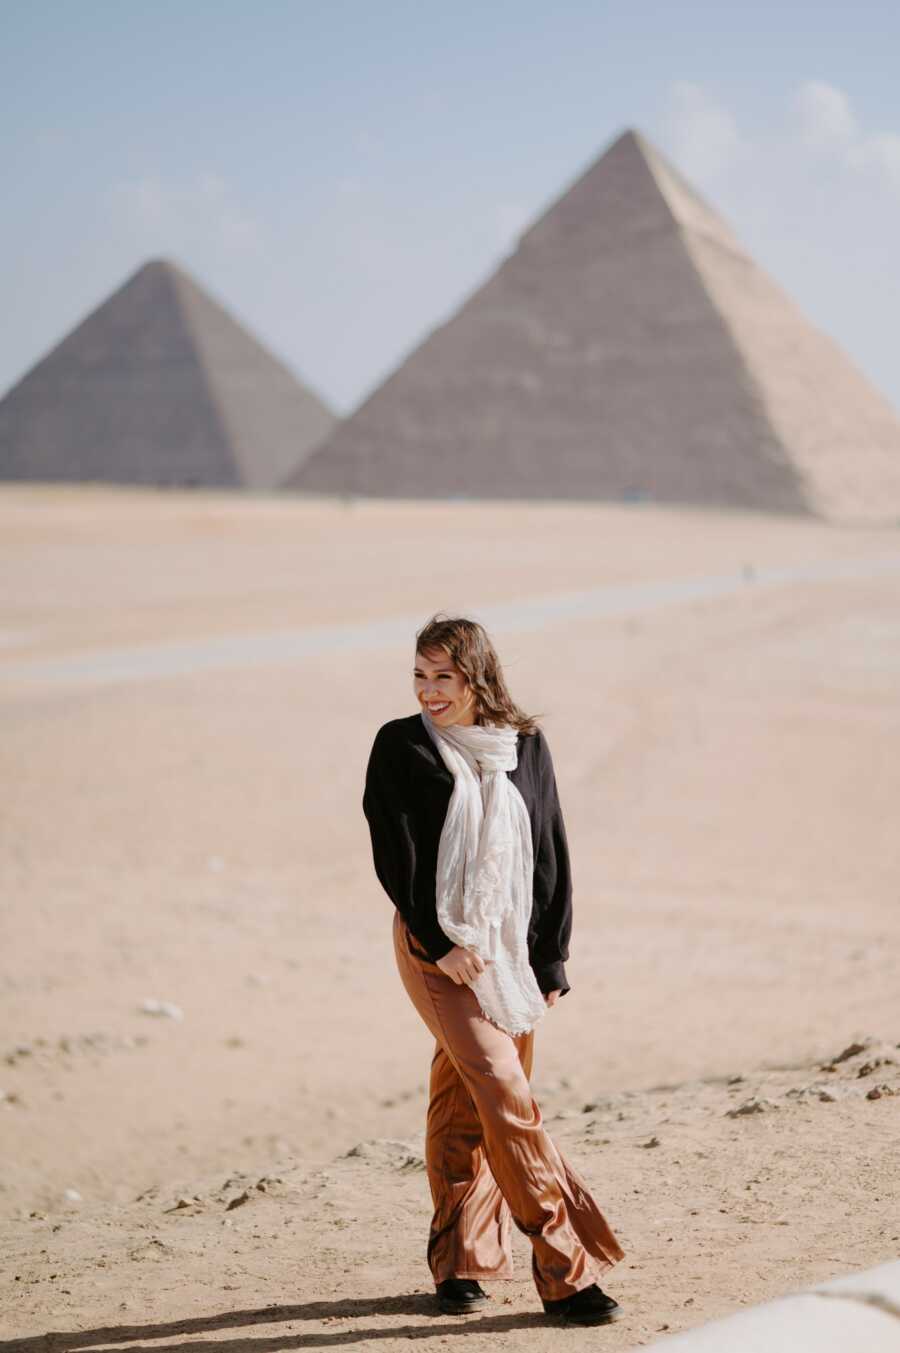 woman enjoying the sites of egypt